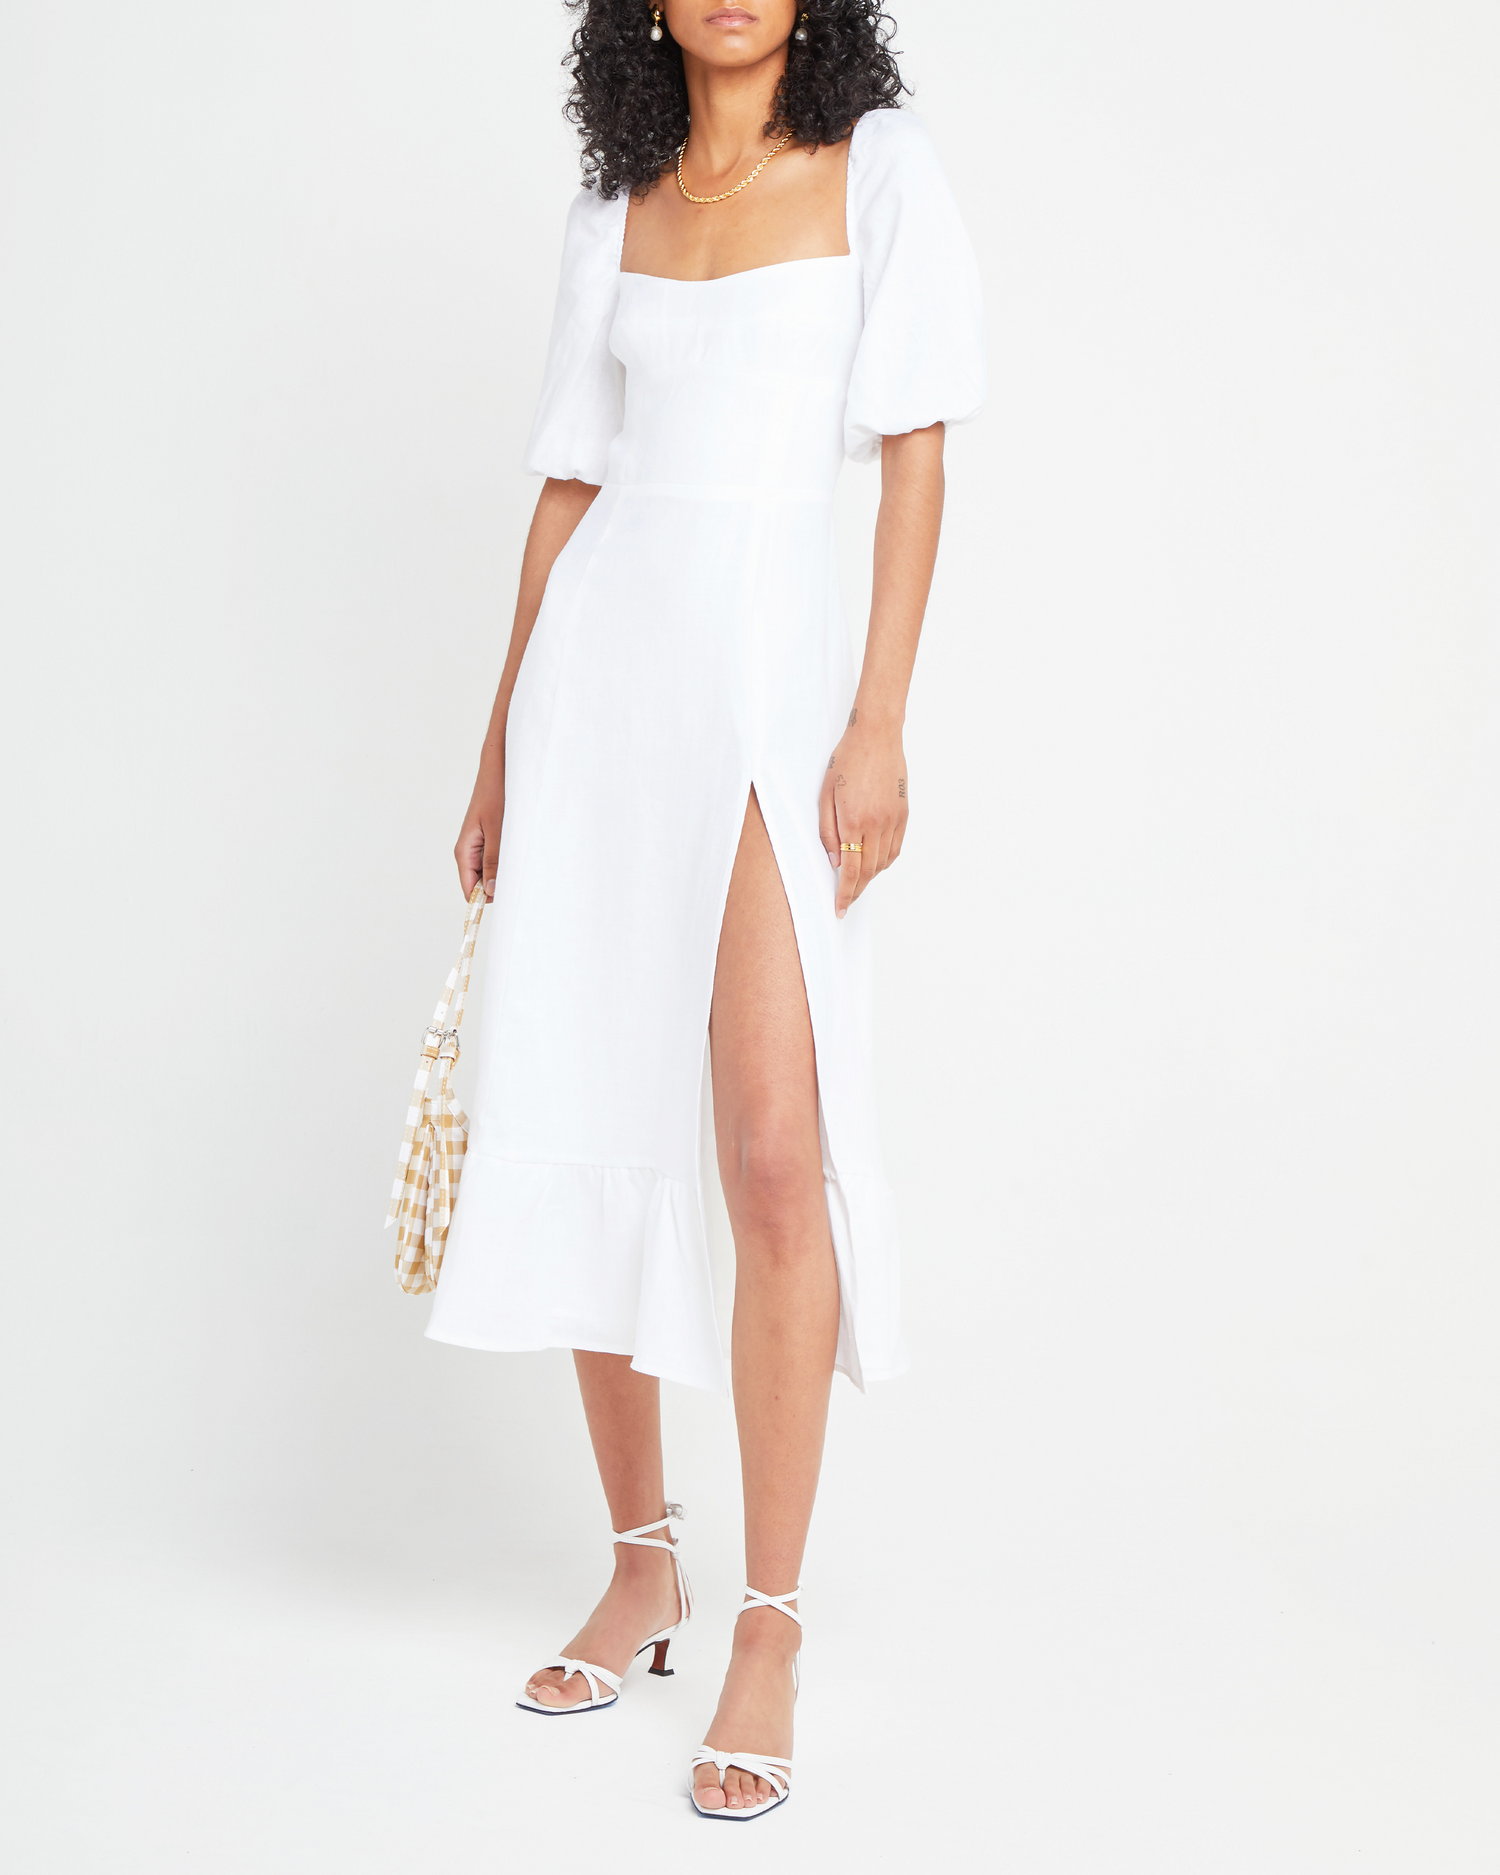 Third image of Violetta Midi Dress, a white midi dress, sweetheart neckline, short sleeves, puff sleeves, side slit